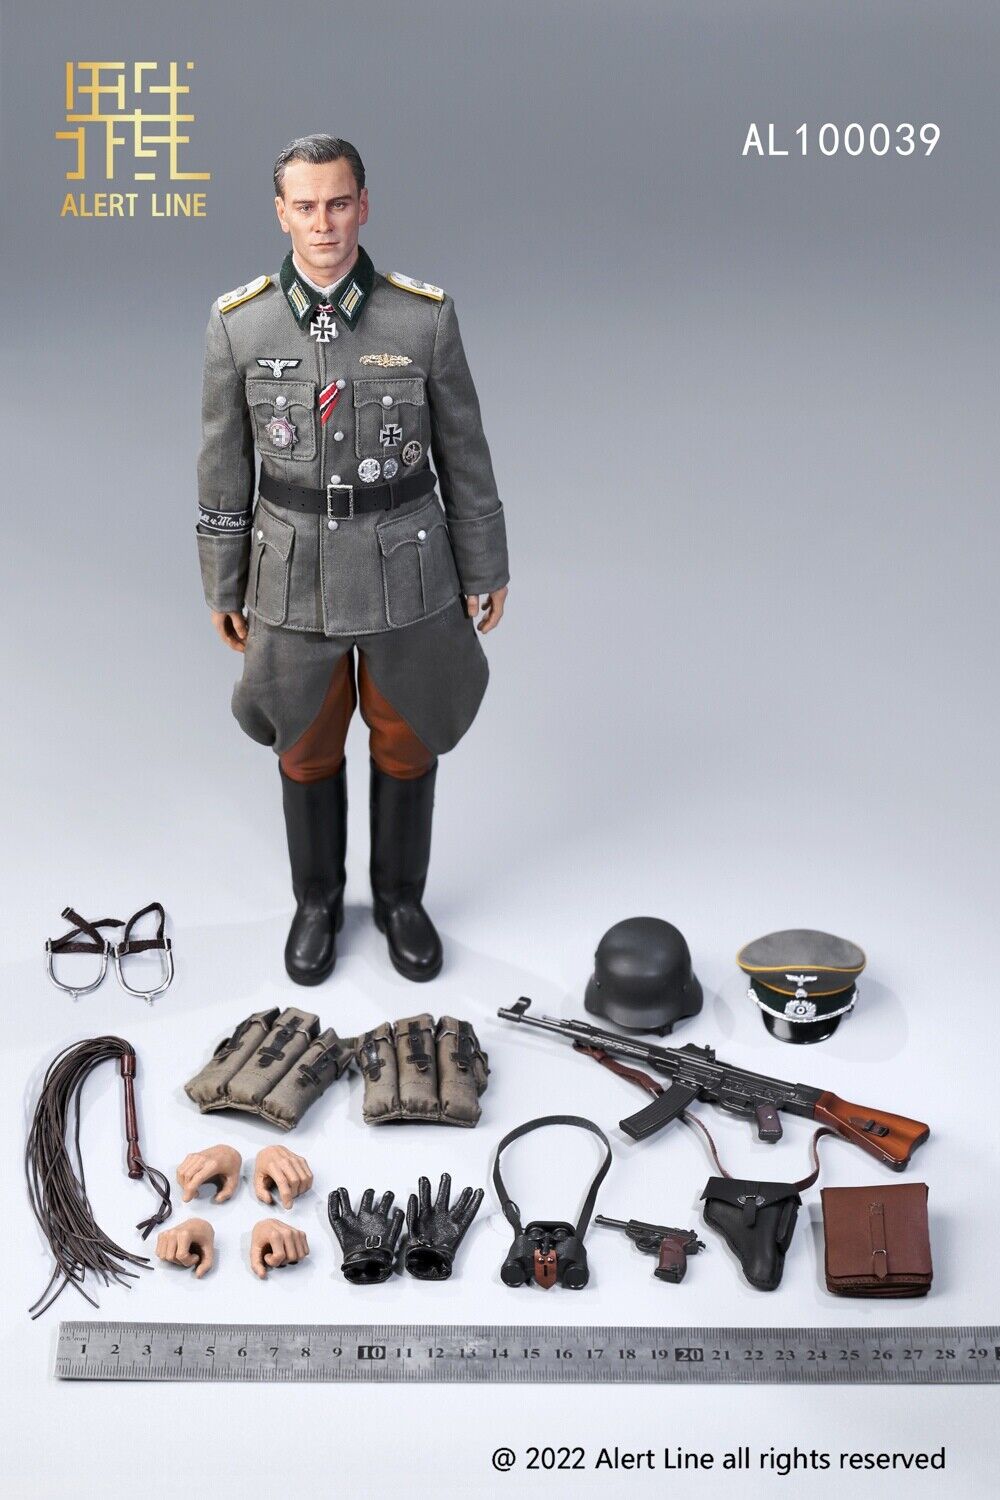 Pedido Figura WWII German Cavalry Officer marca Alert Line AL100039 escala 1/6